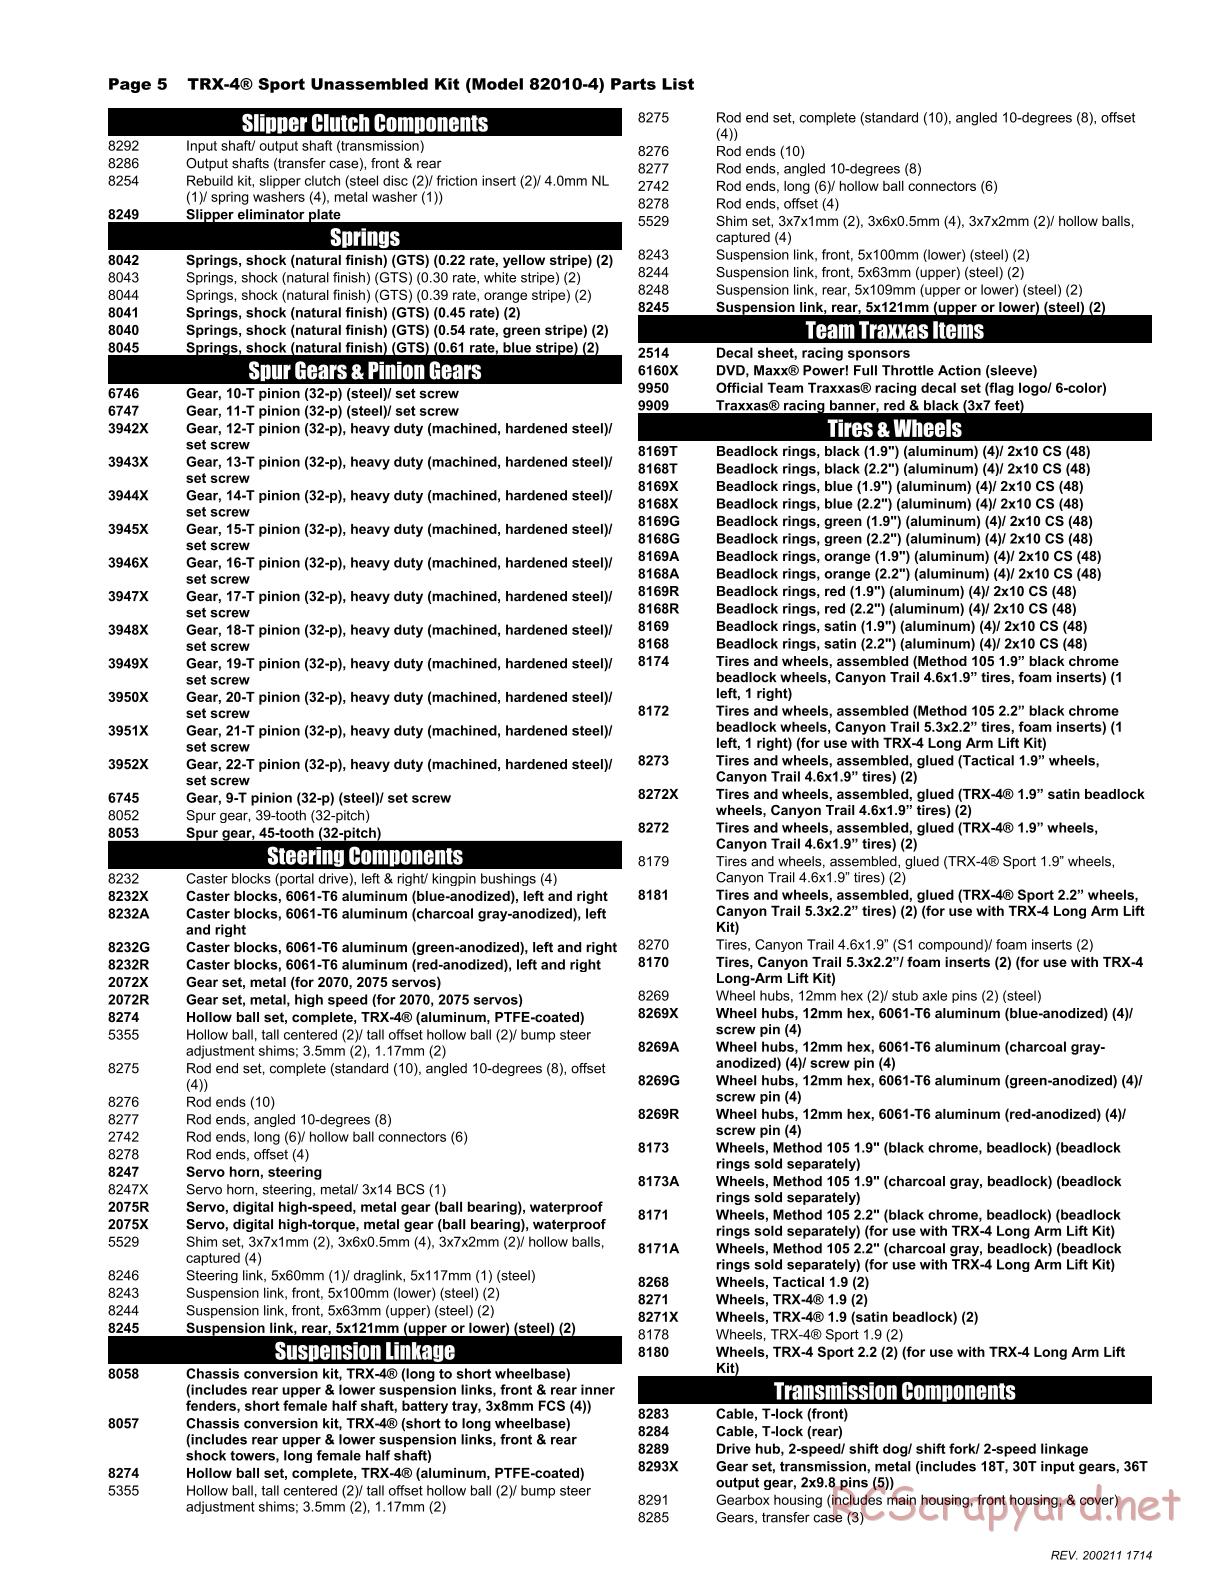 Traxxas - TRX-4 Sport - Parts List - Page 5